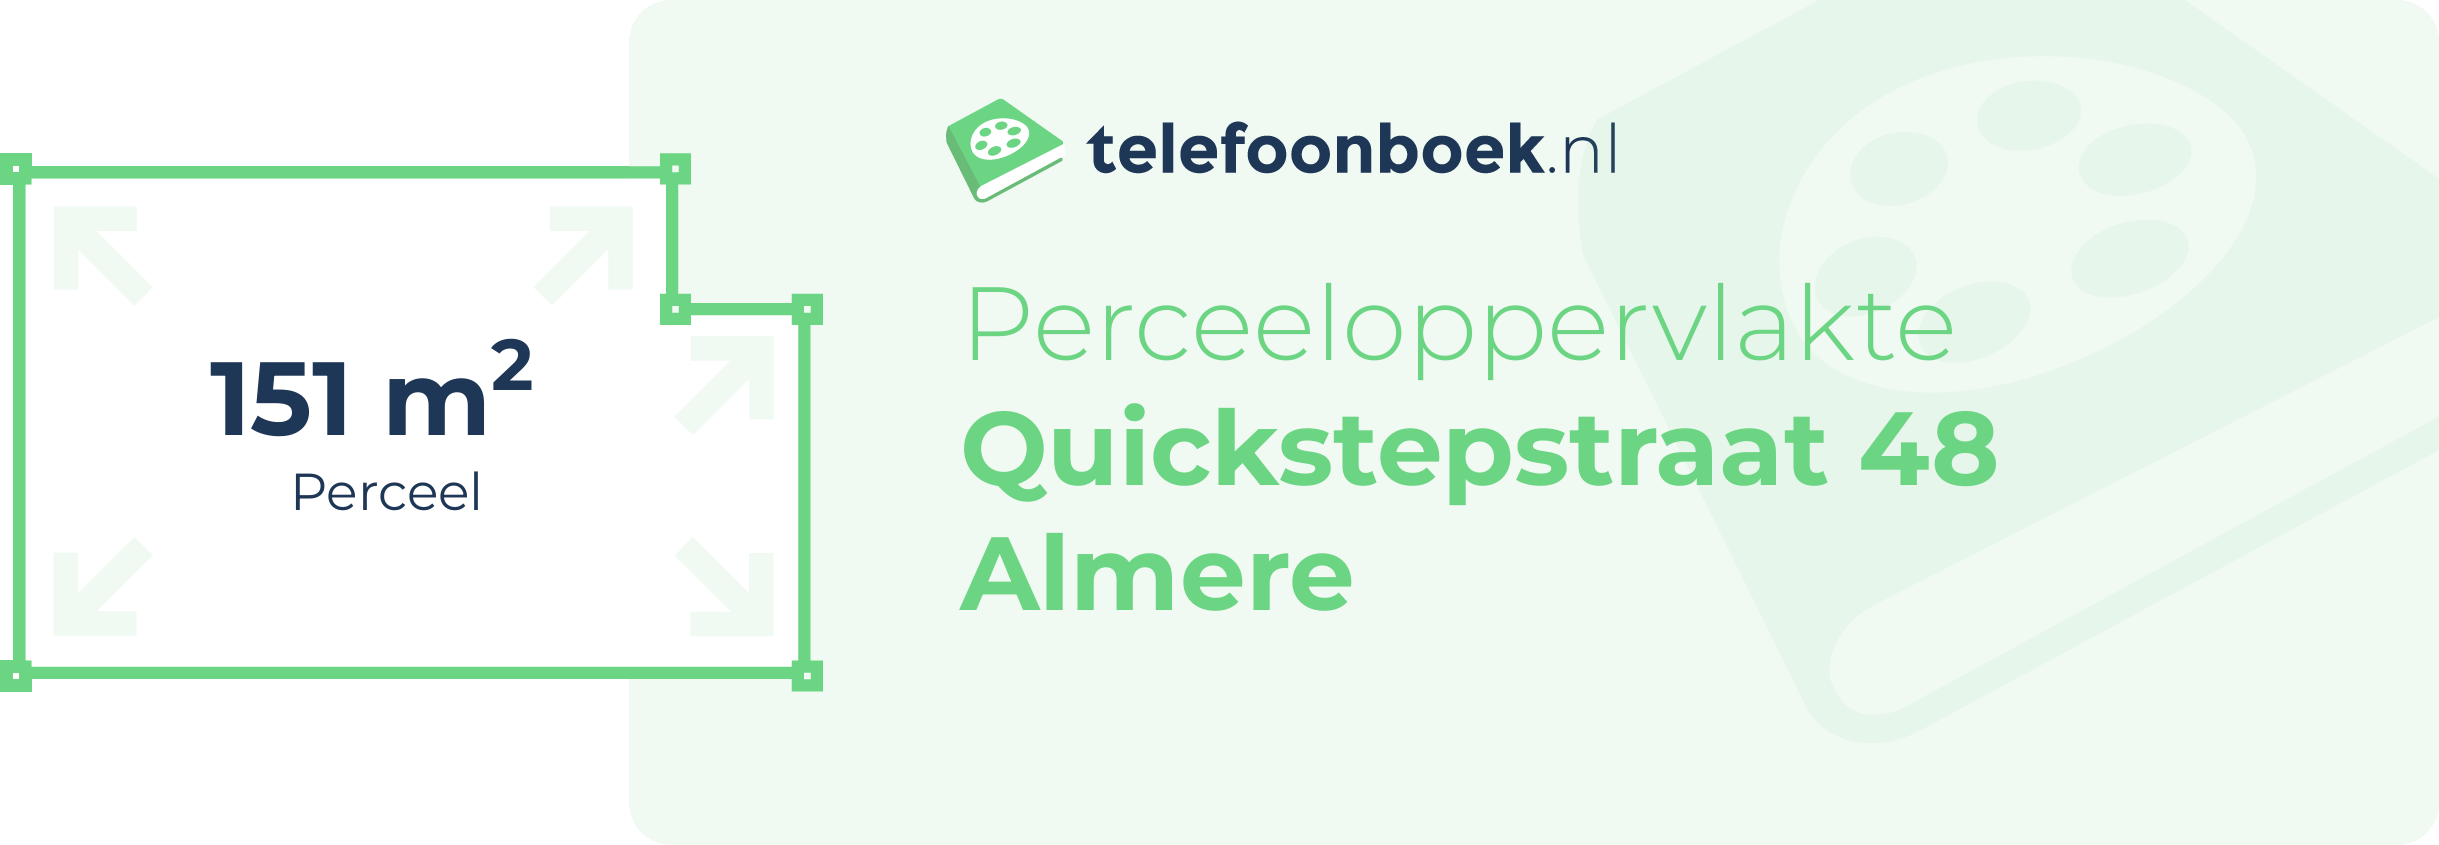 Perceeloppervlakte Quickstepstraat 48 Almere